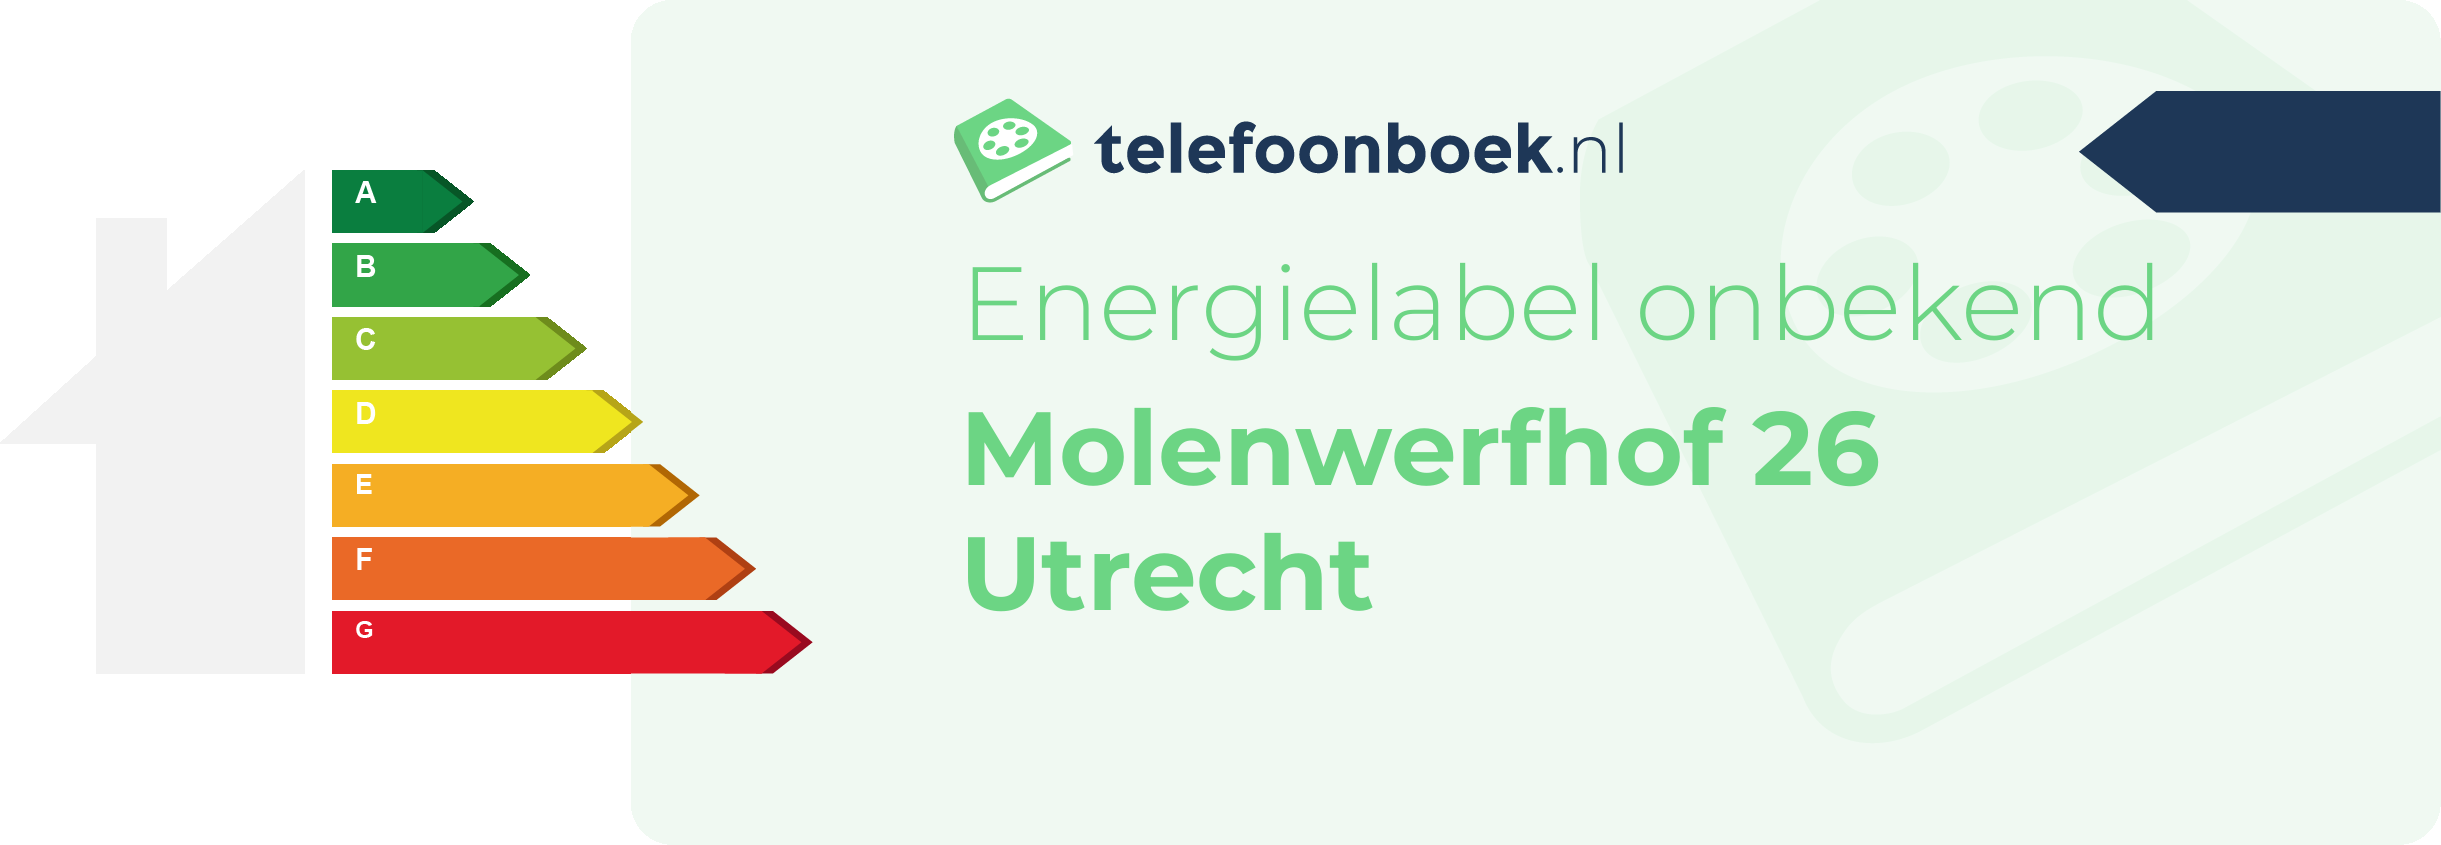 Energielabel Molenwerfhof 26 Utrecht